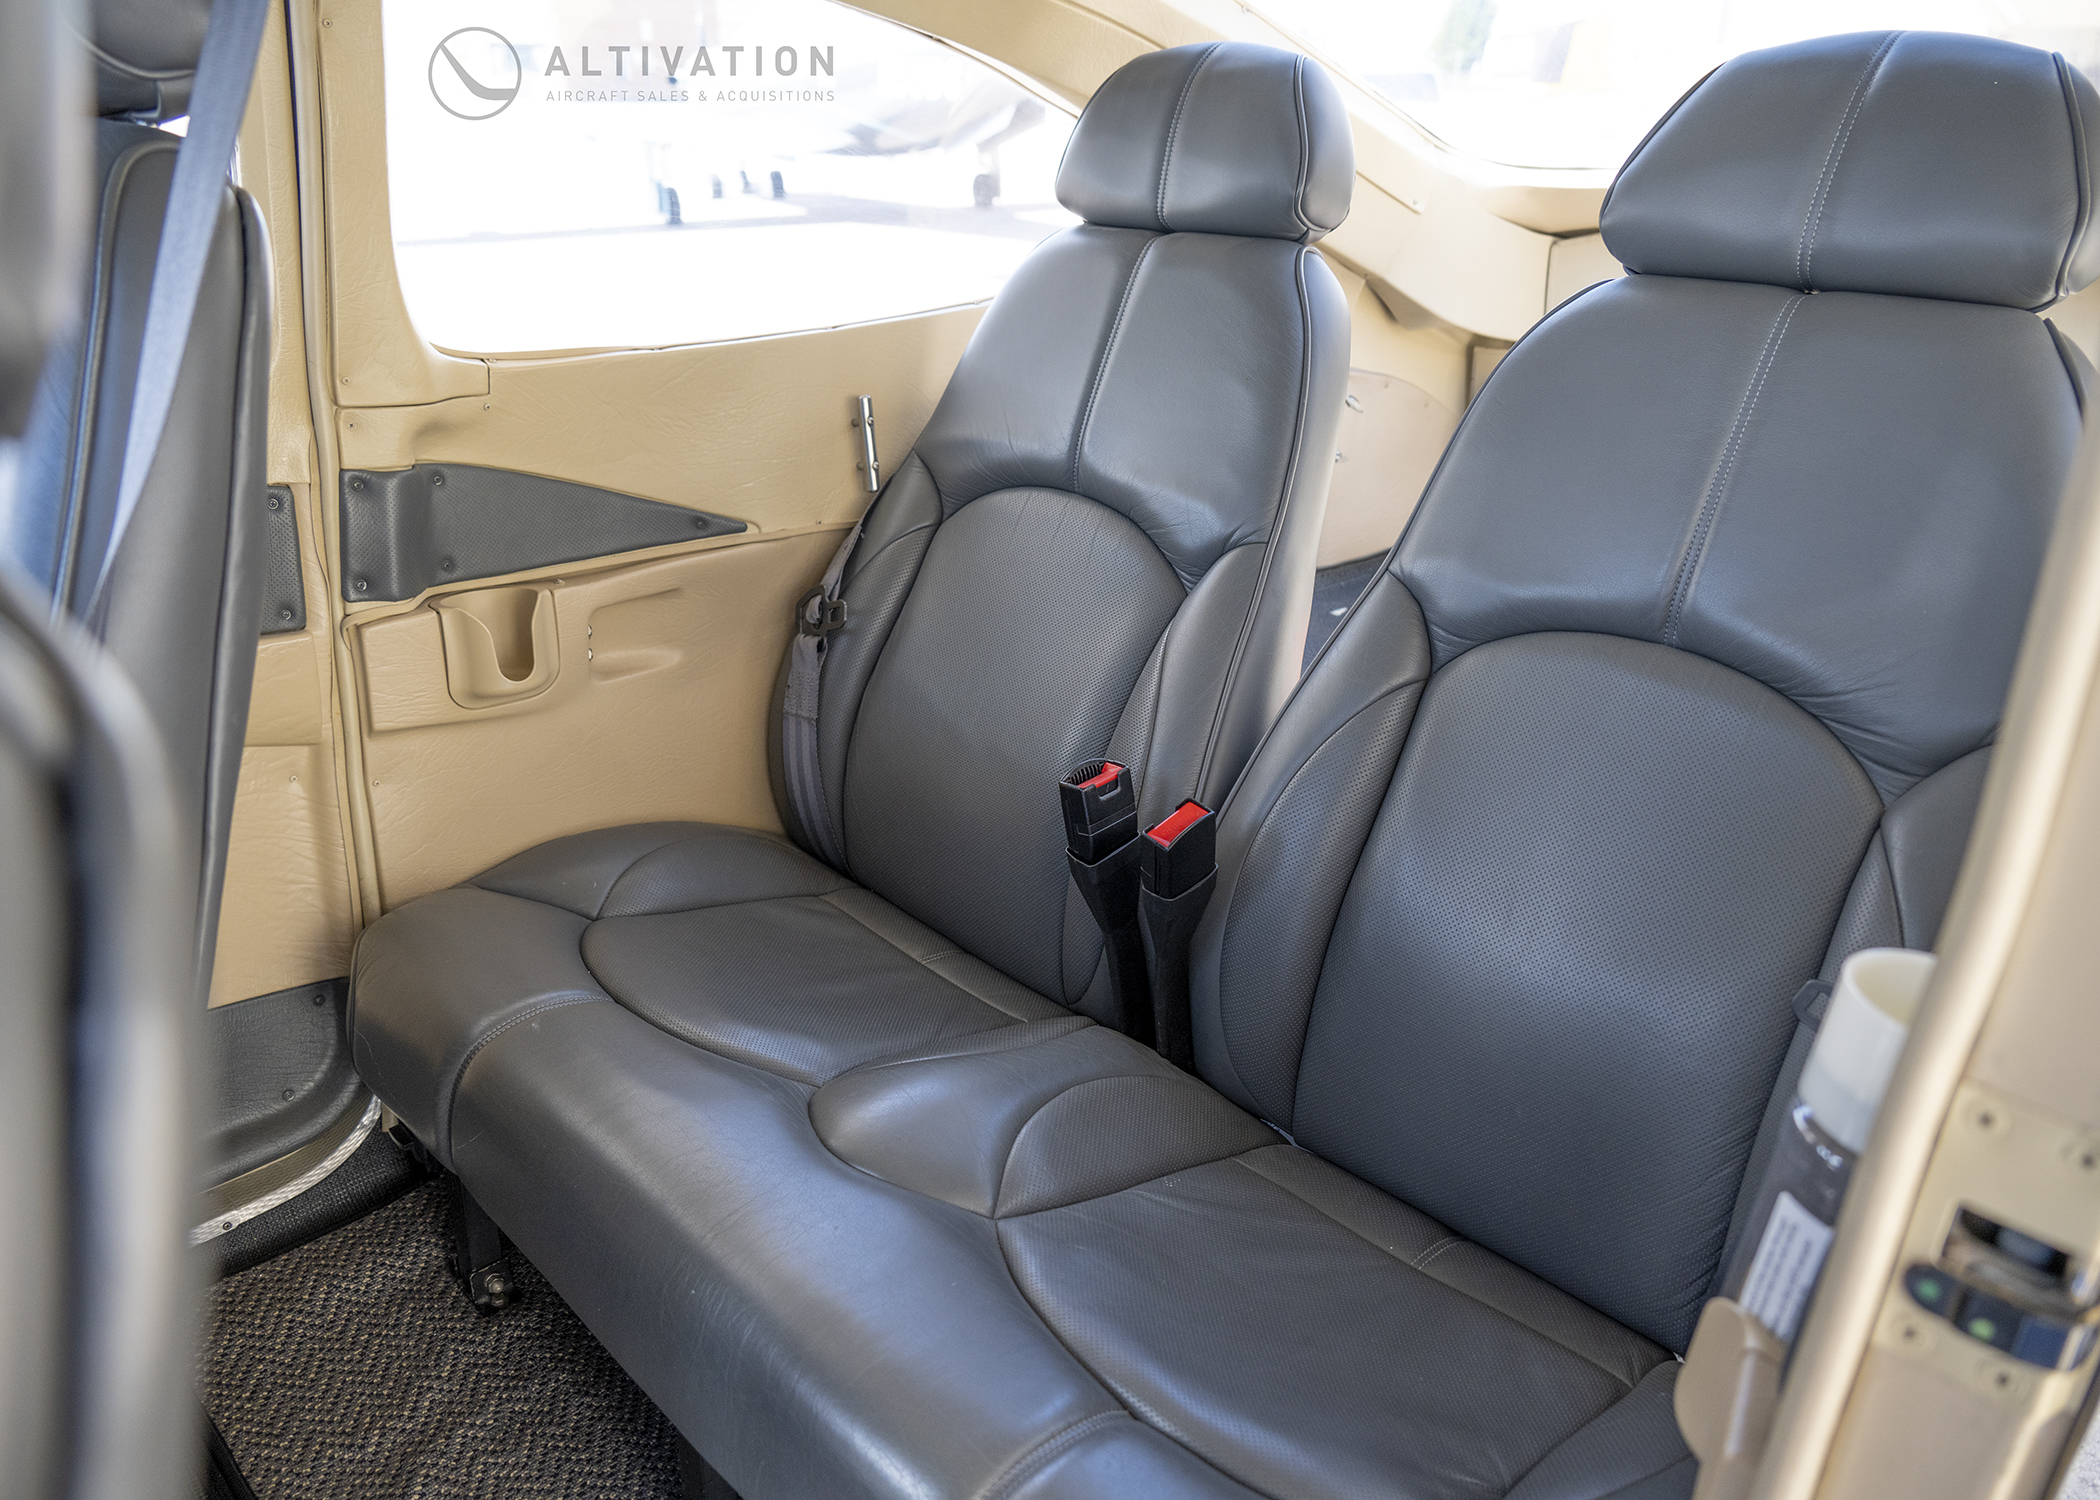 2001 Cessna T182T - Interior Rear Seats